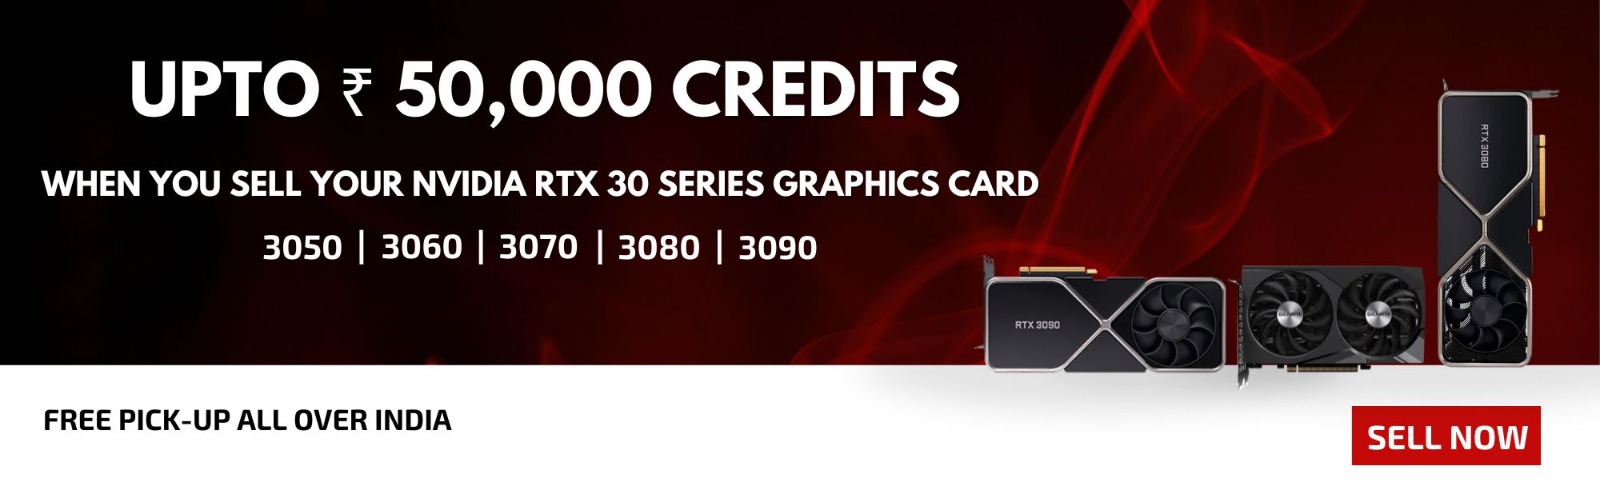 graphics card offer website banner